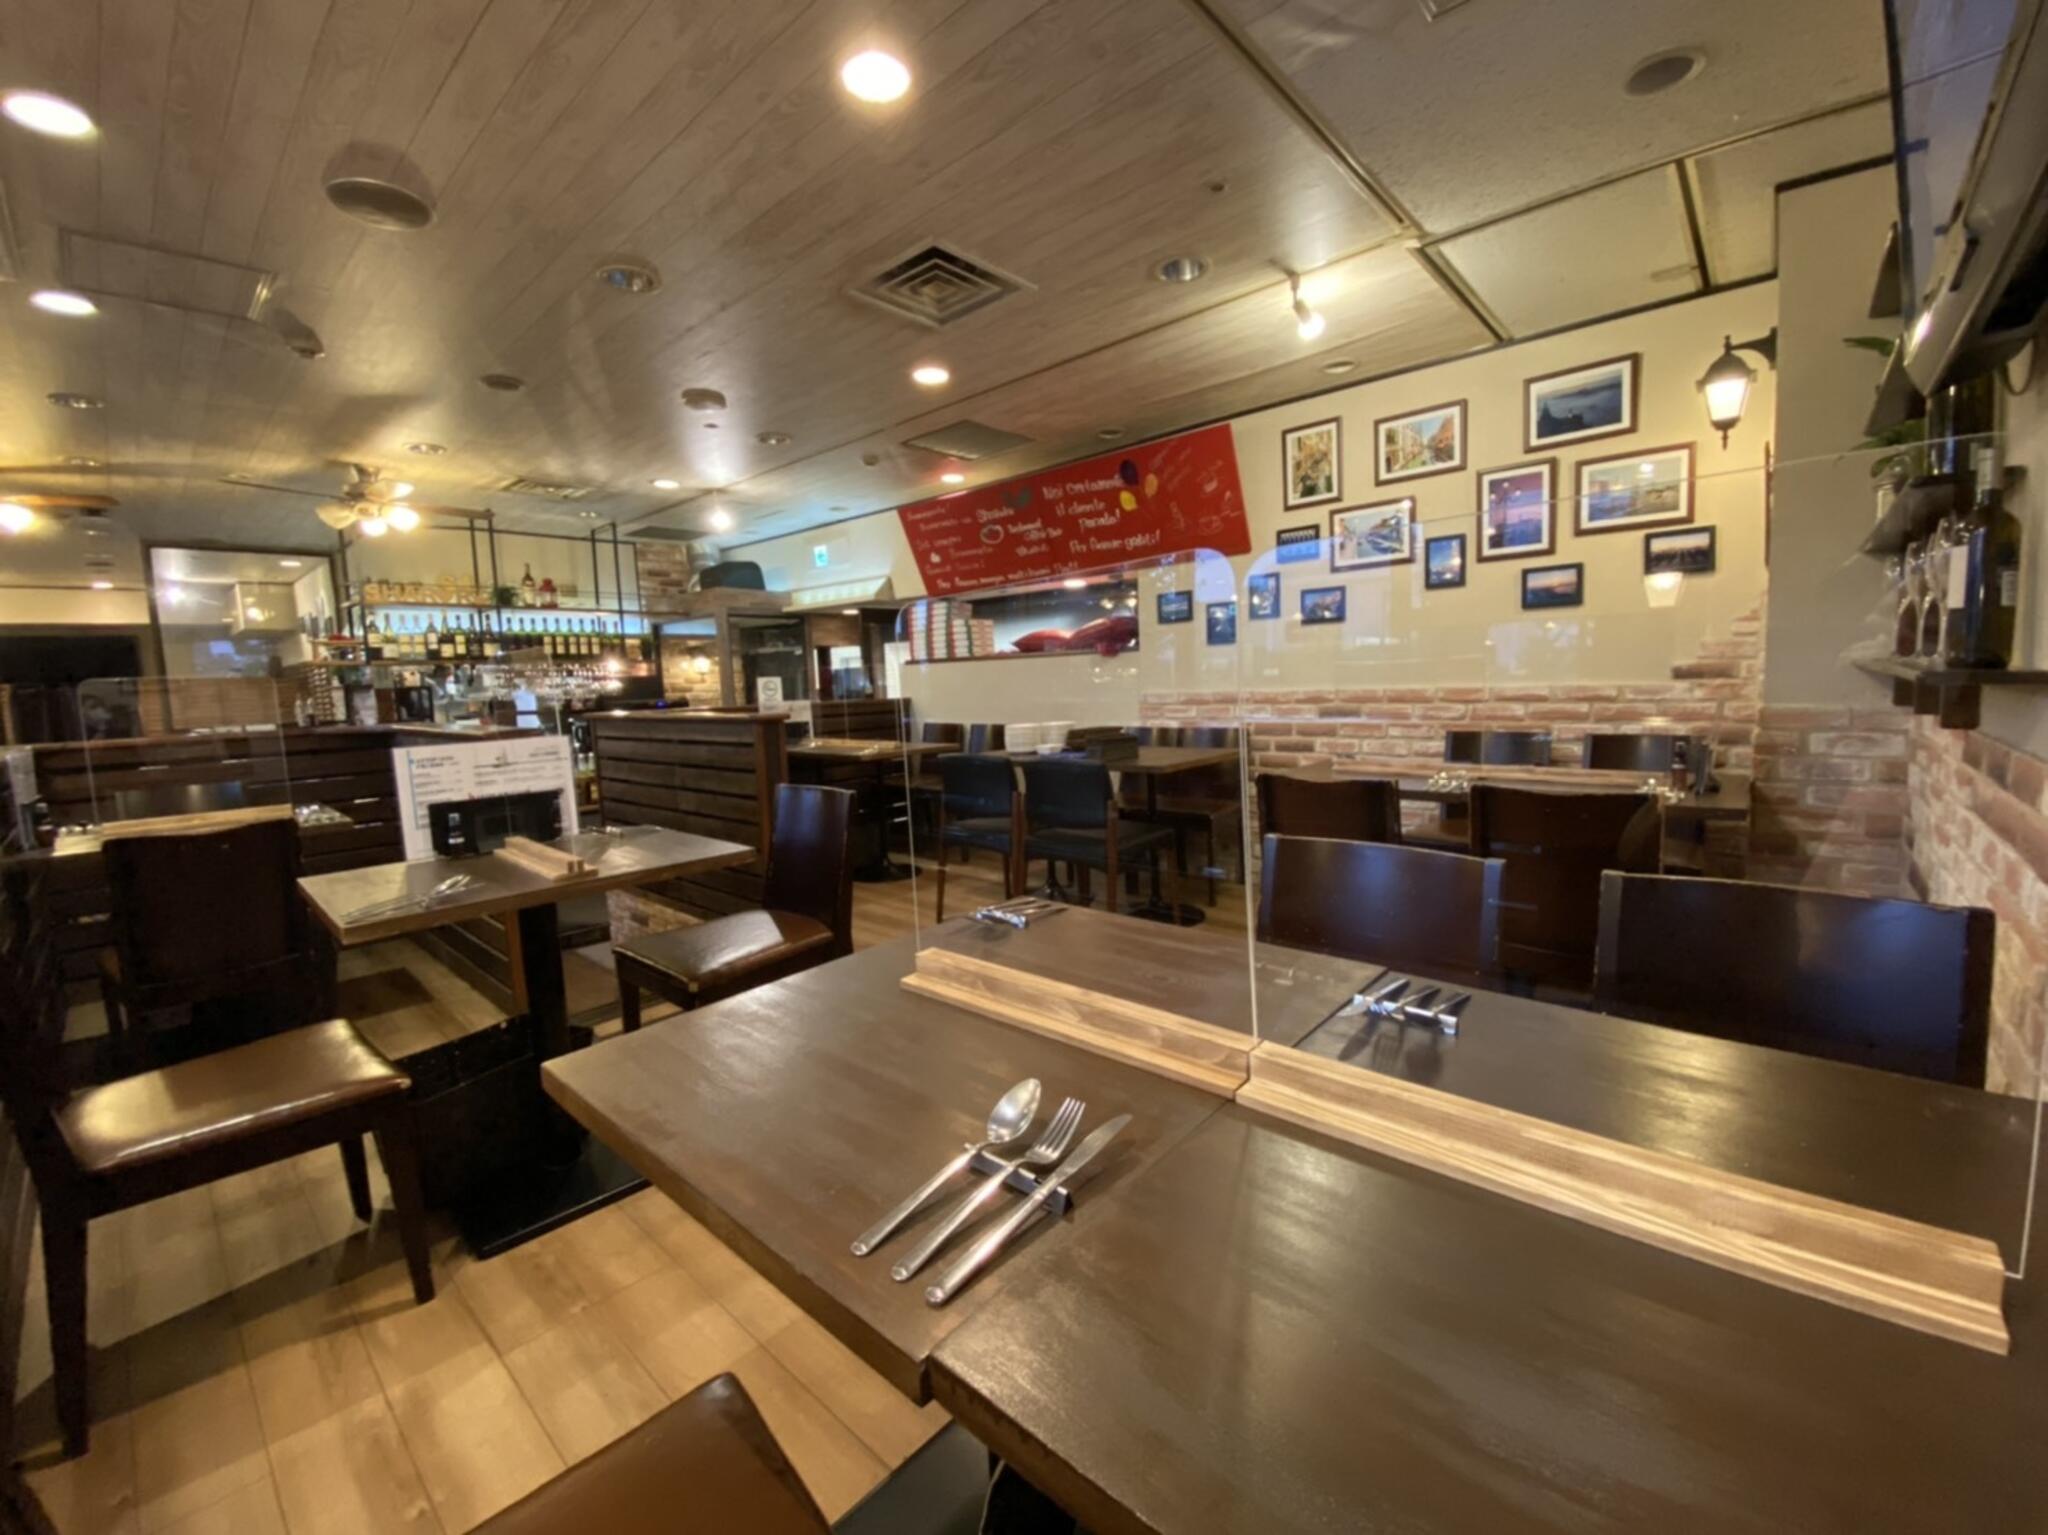 Restaurant cafe bar Sharuru南大沢店の代表写真1